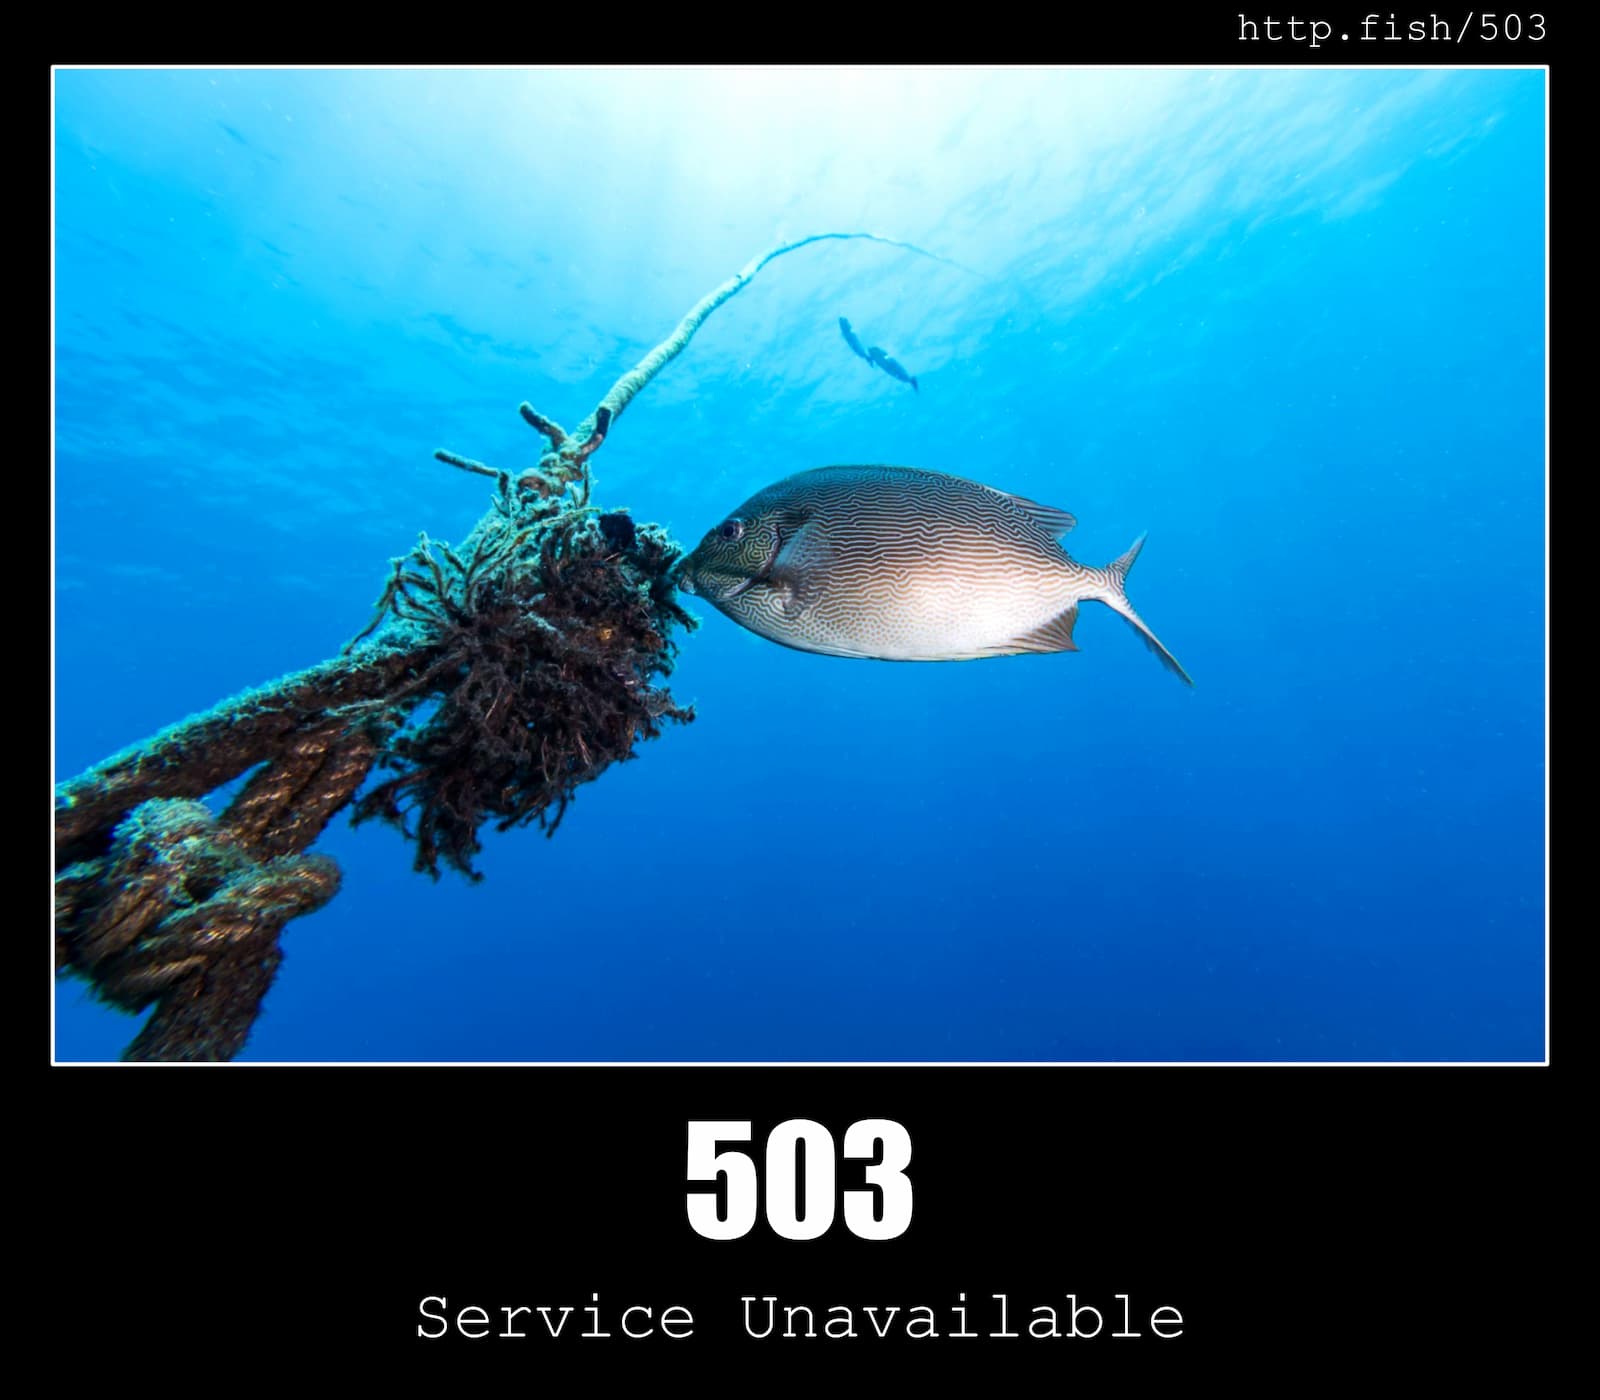 HTTP Status Code 503 Service Unavailable & Fish